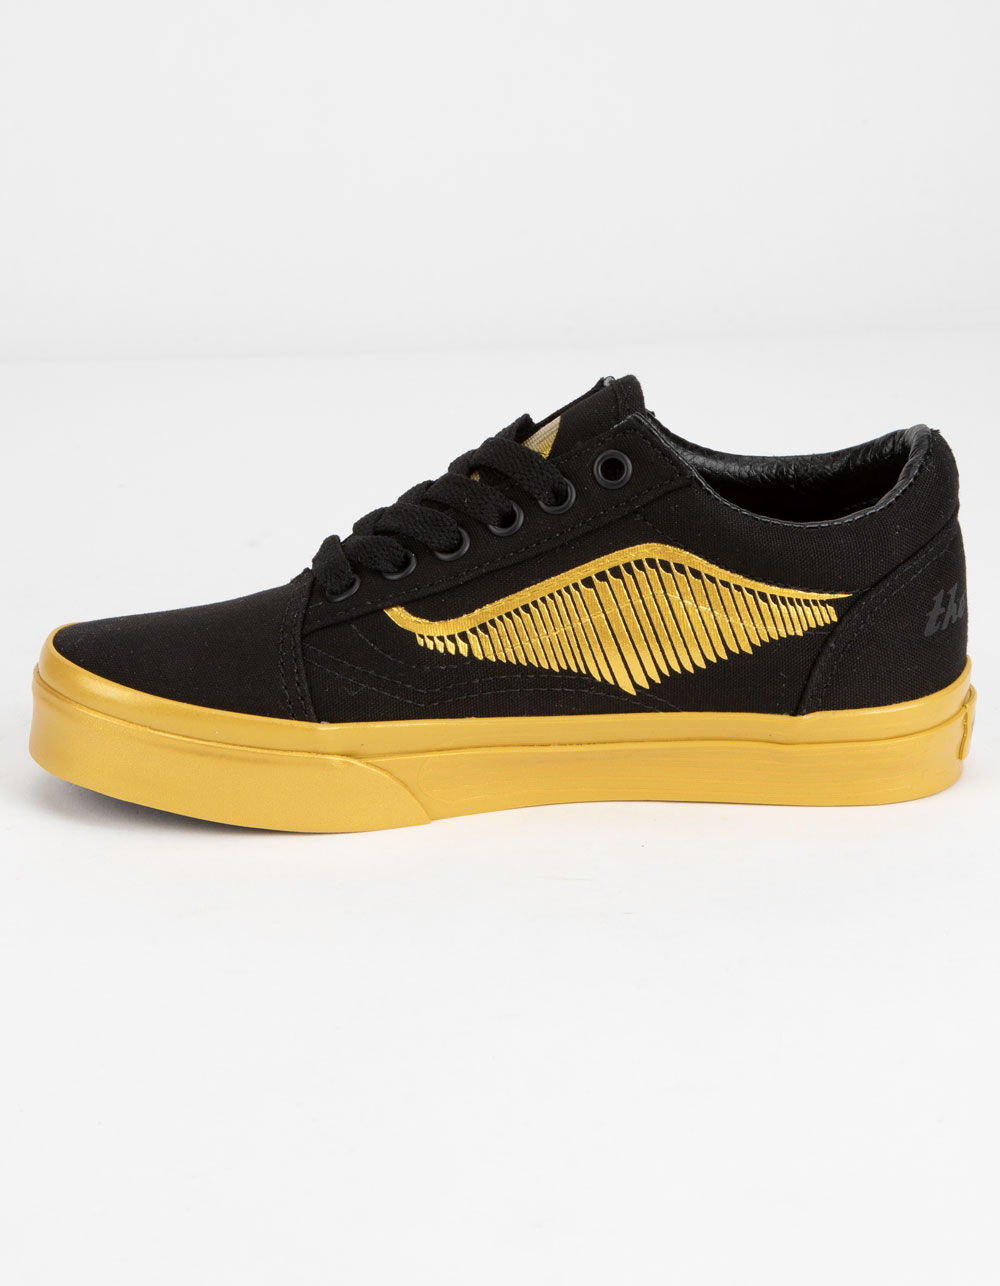 Men's shoes Vans x Harry Potter Old Skool Golden Snitch/ Black